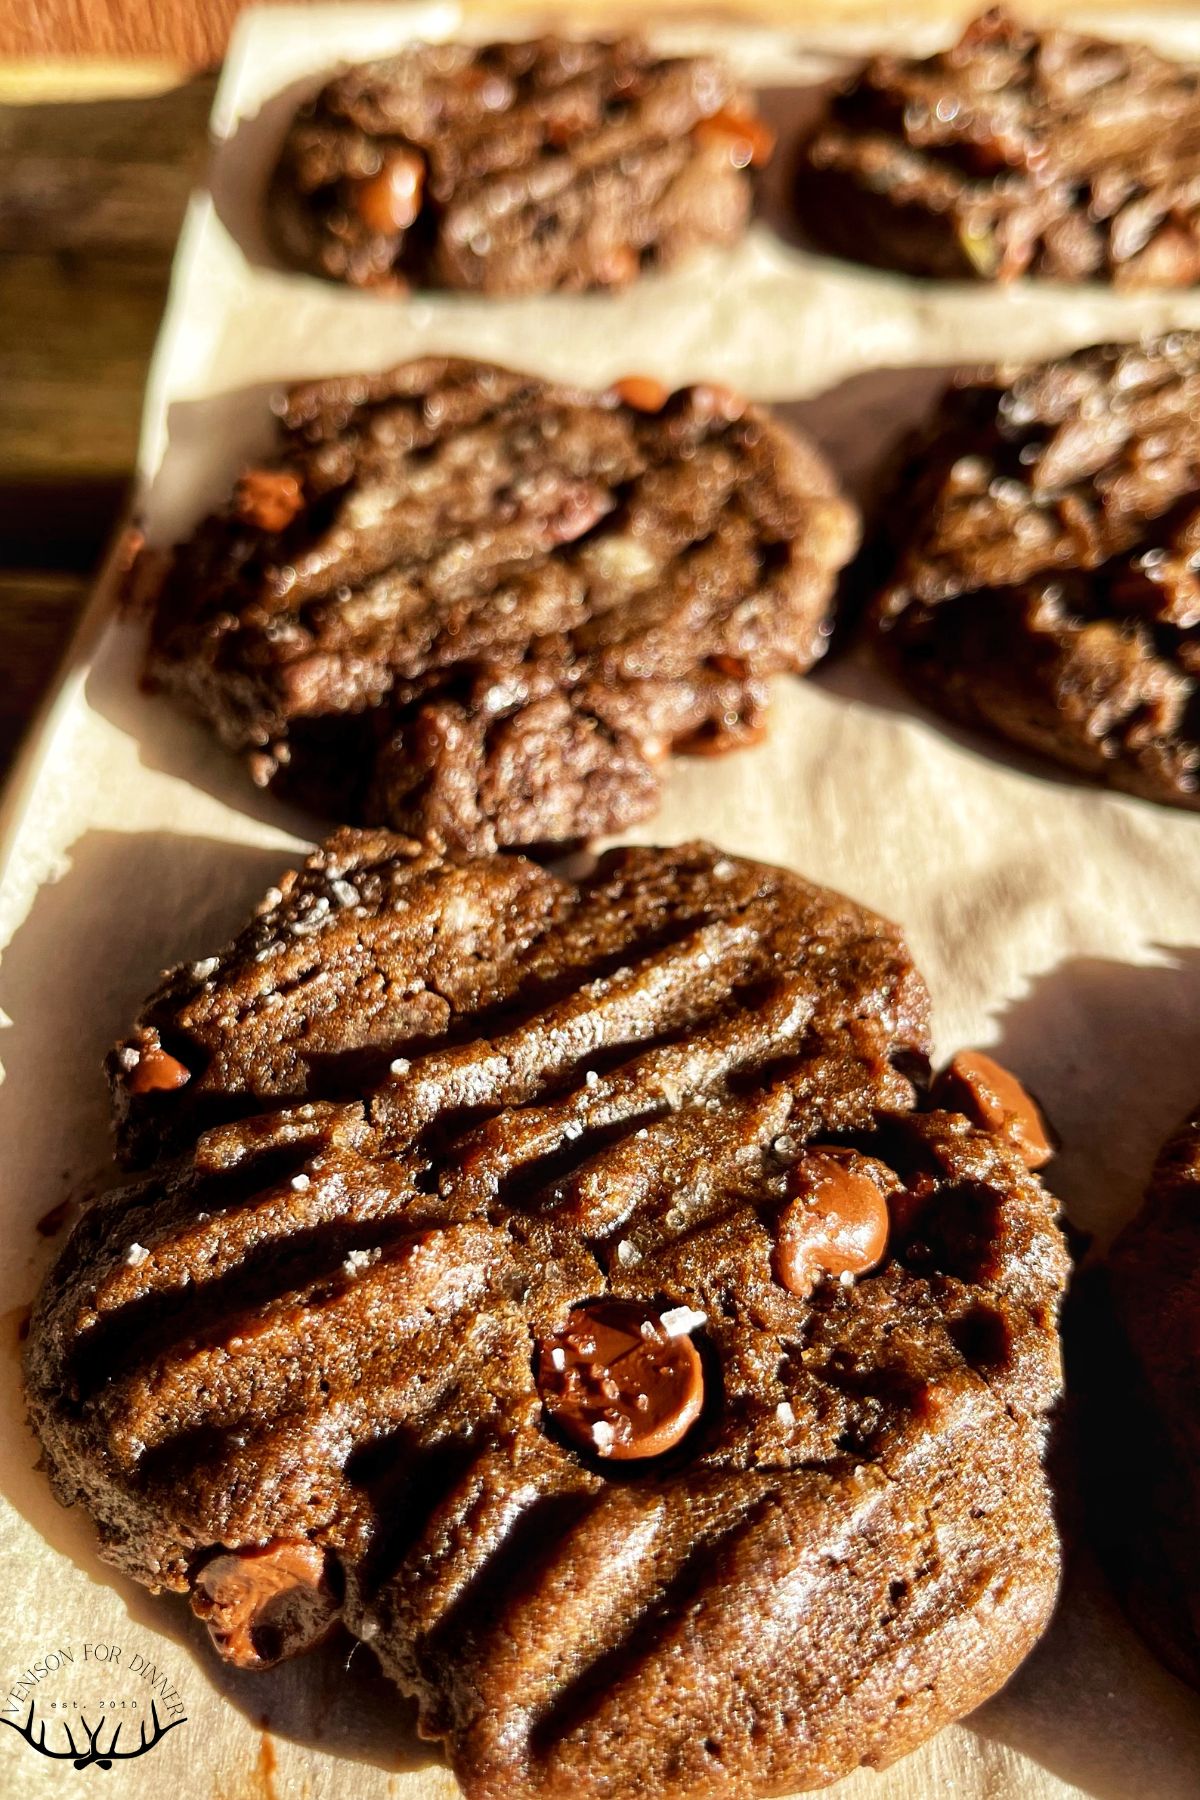 Baked vegan chocolate cookies on a baking sheet.